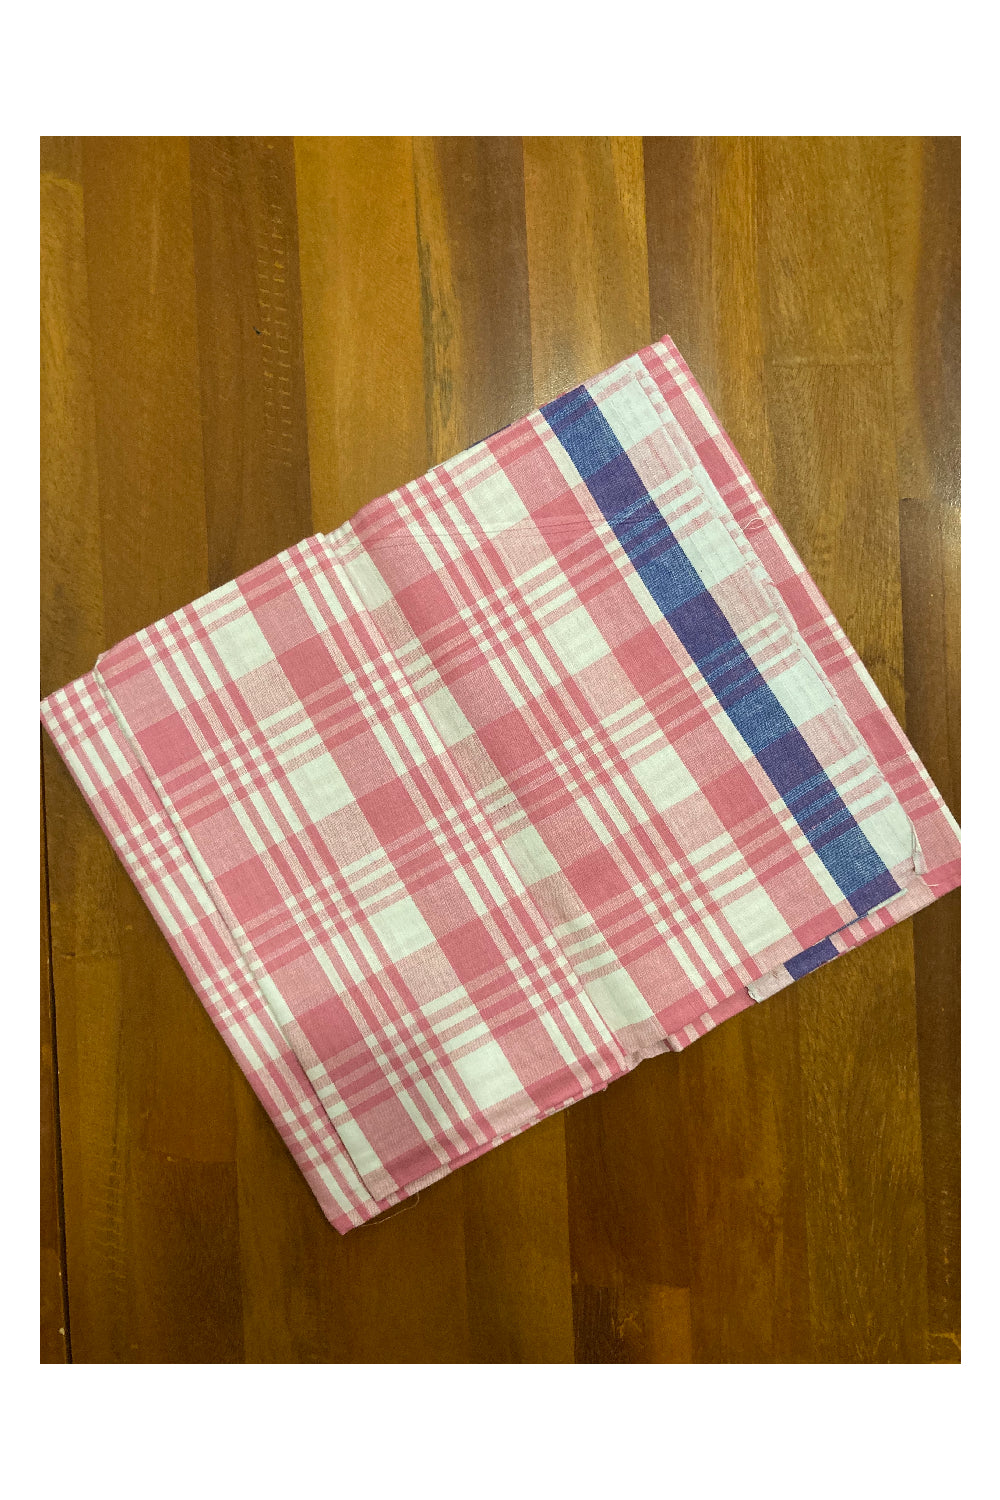 Southloom Premium Handloom Pink and White Checkered Borderless Single Mundu (South Indian Kerala Dhoti)